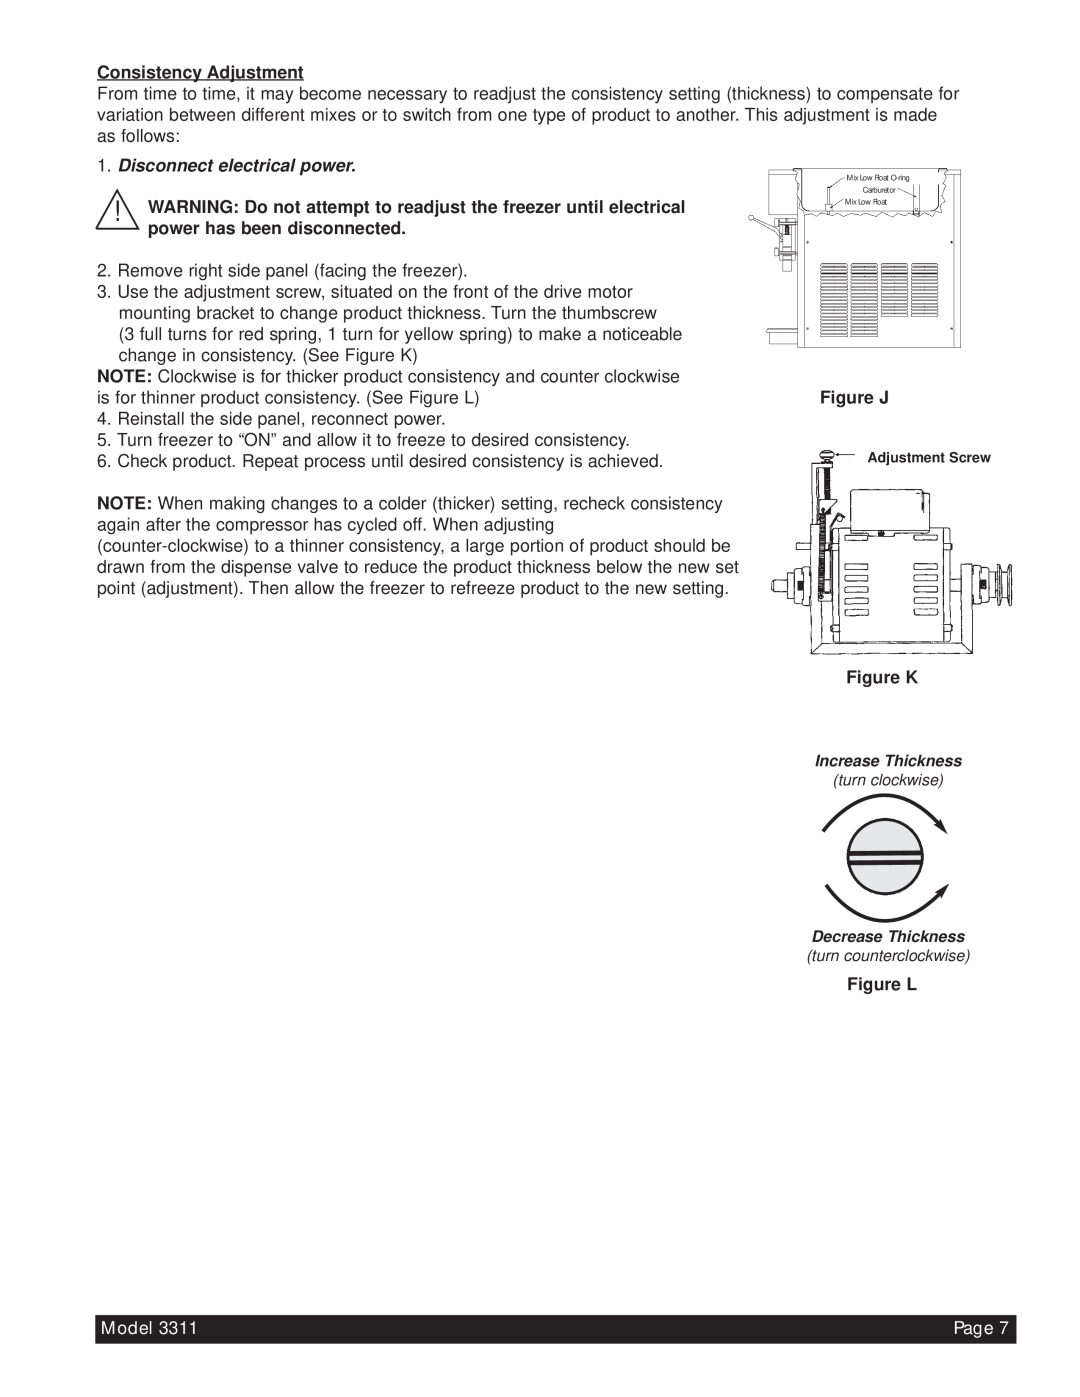 Beverage-Air 3311 manual Consistency Adjustment, Disconnect electrical power, Figure J, Figure K, Figure L, Model, Page 